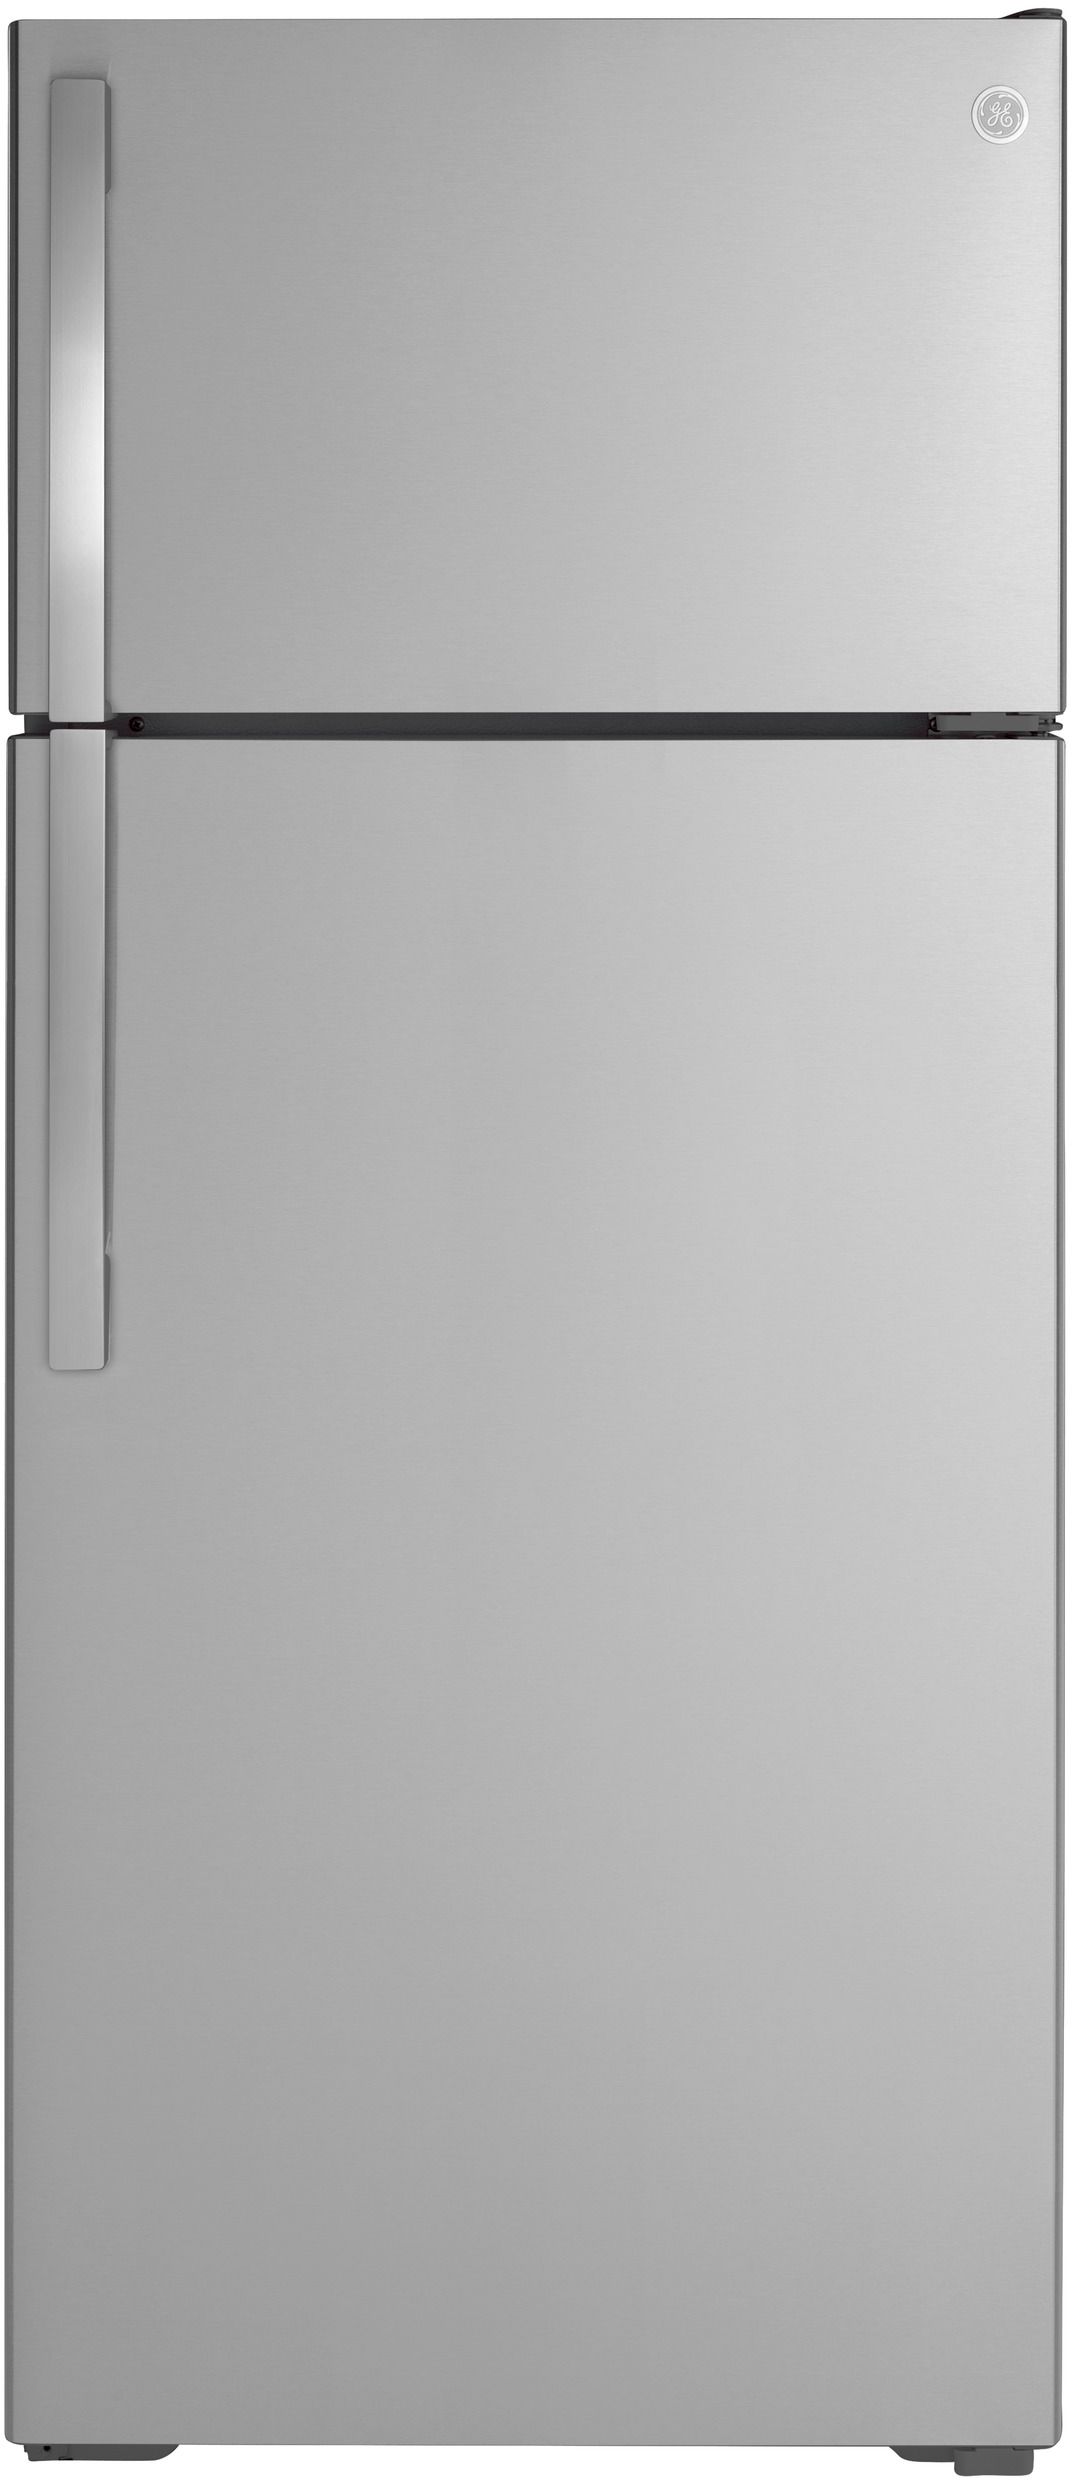 GE® 17.5 Cu. Ft. Stainless Steel Top Freezer Refrigerator